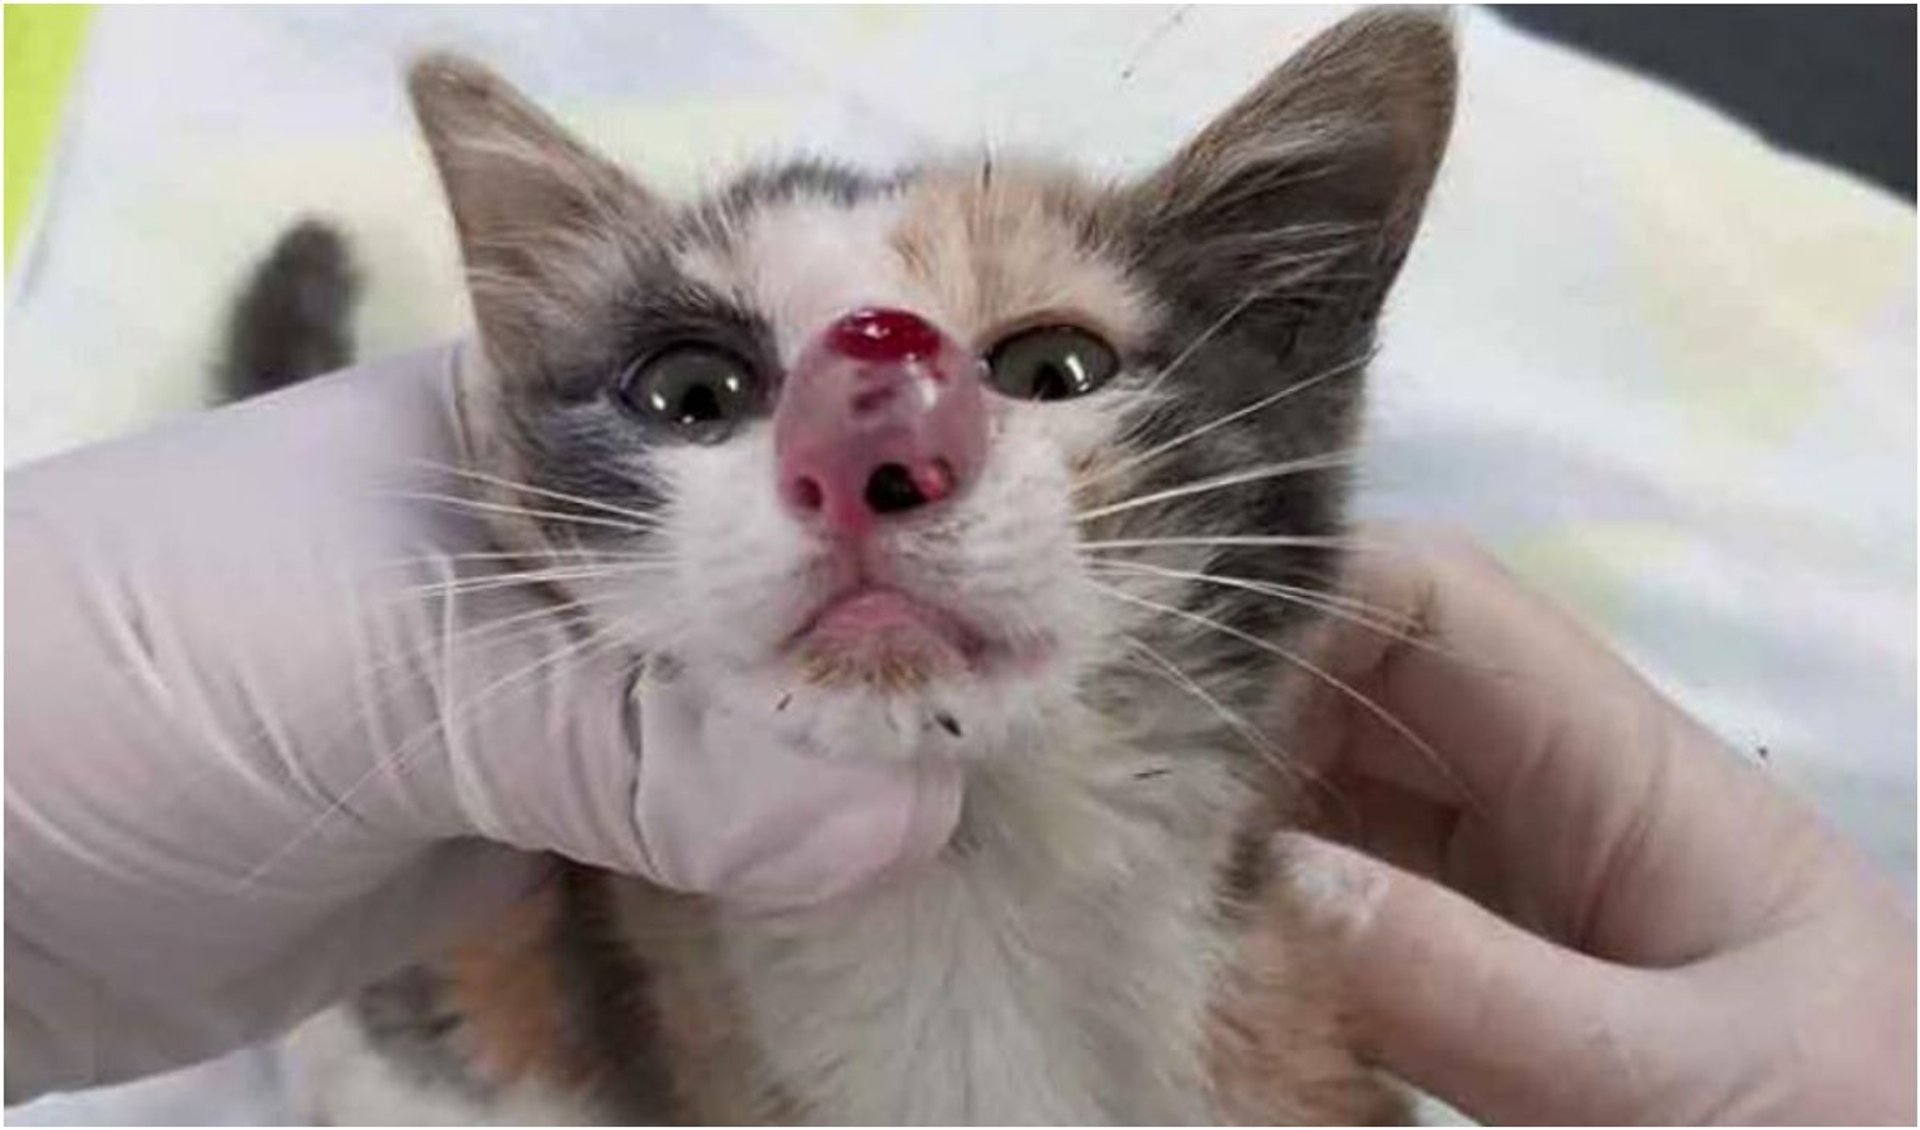 Kotek trafił do weterynarza ze spuchniętym nosem